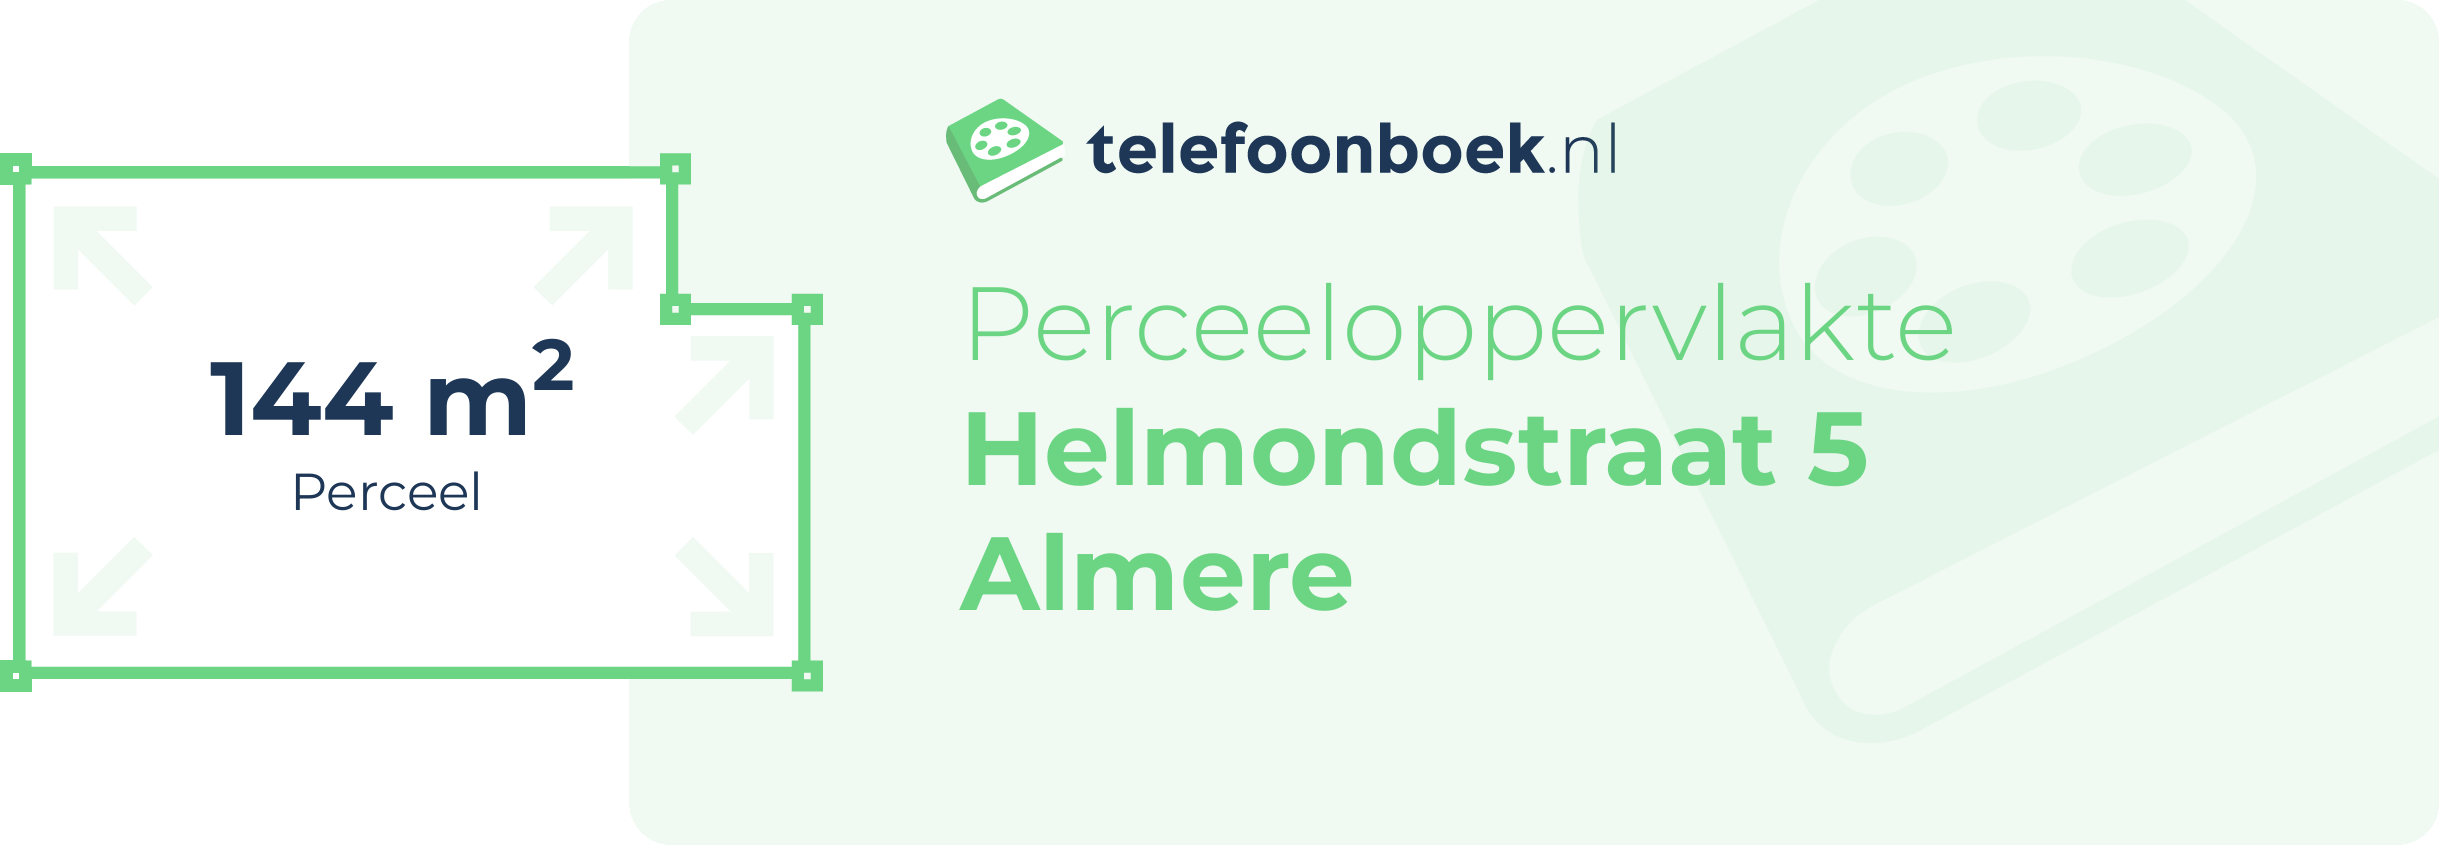 Perceeloppervlakte Helmondstraat 5 Almere